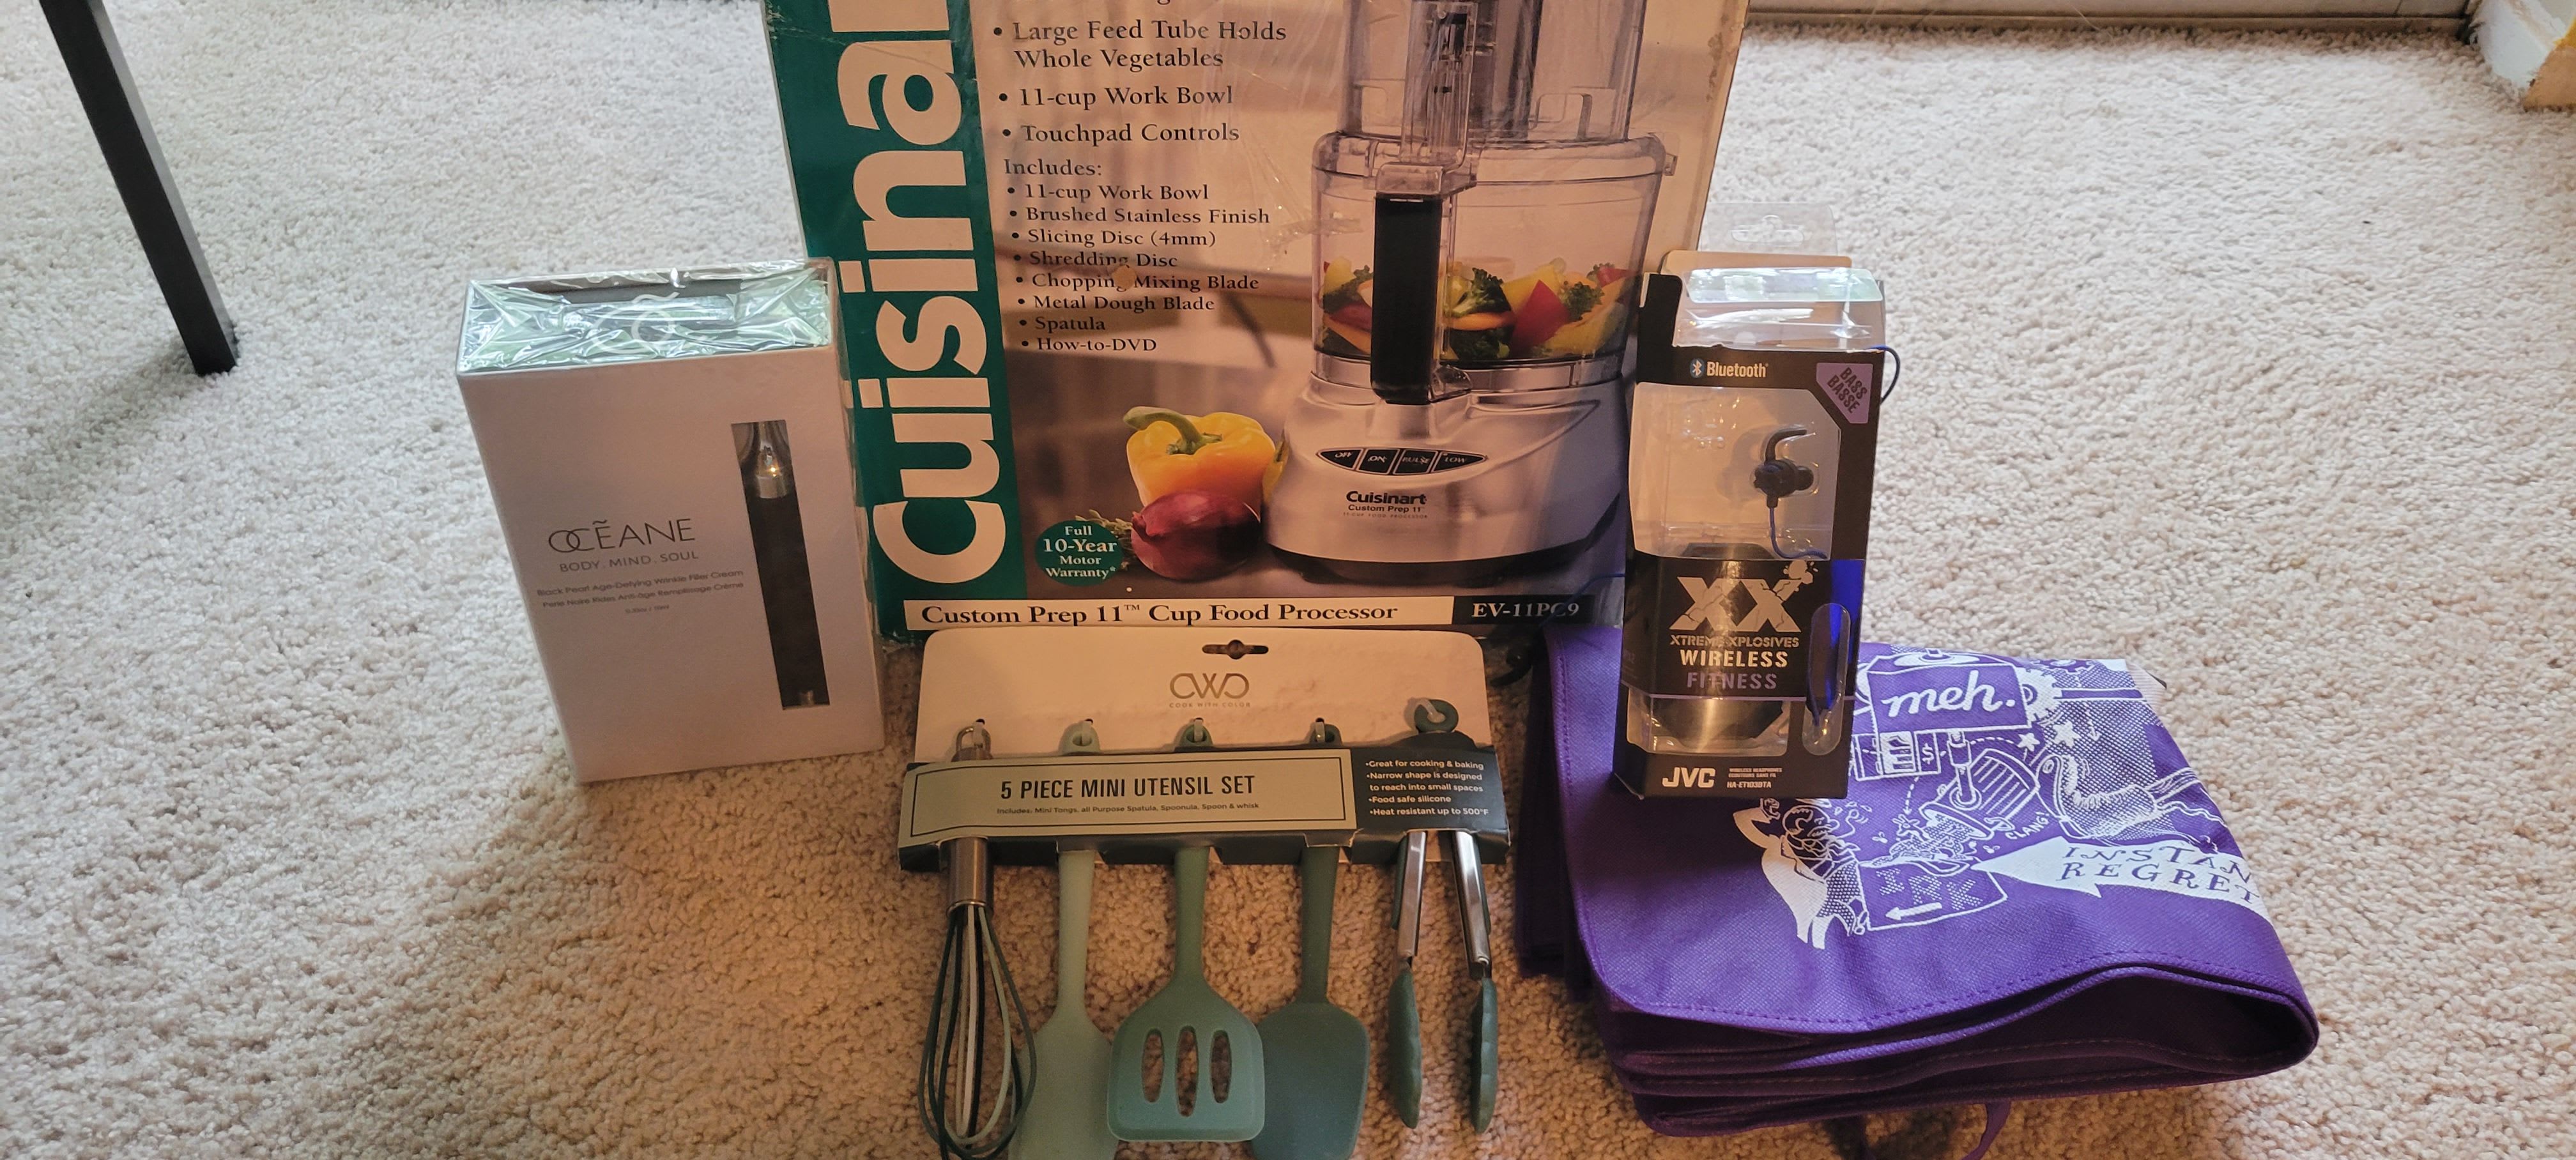 Burr mill coffee grinder - household items - by owner - housewares sale -  craigslist